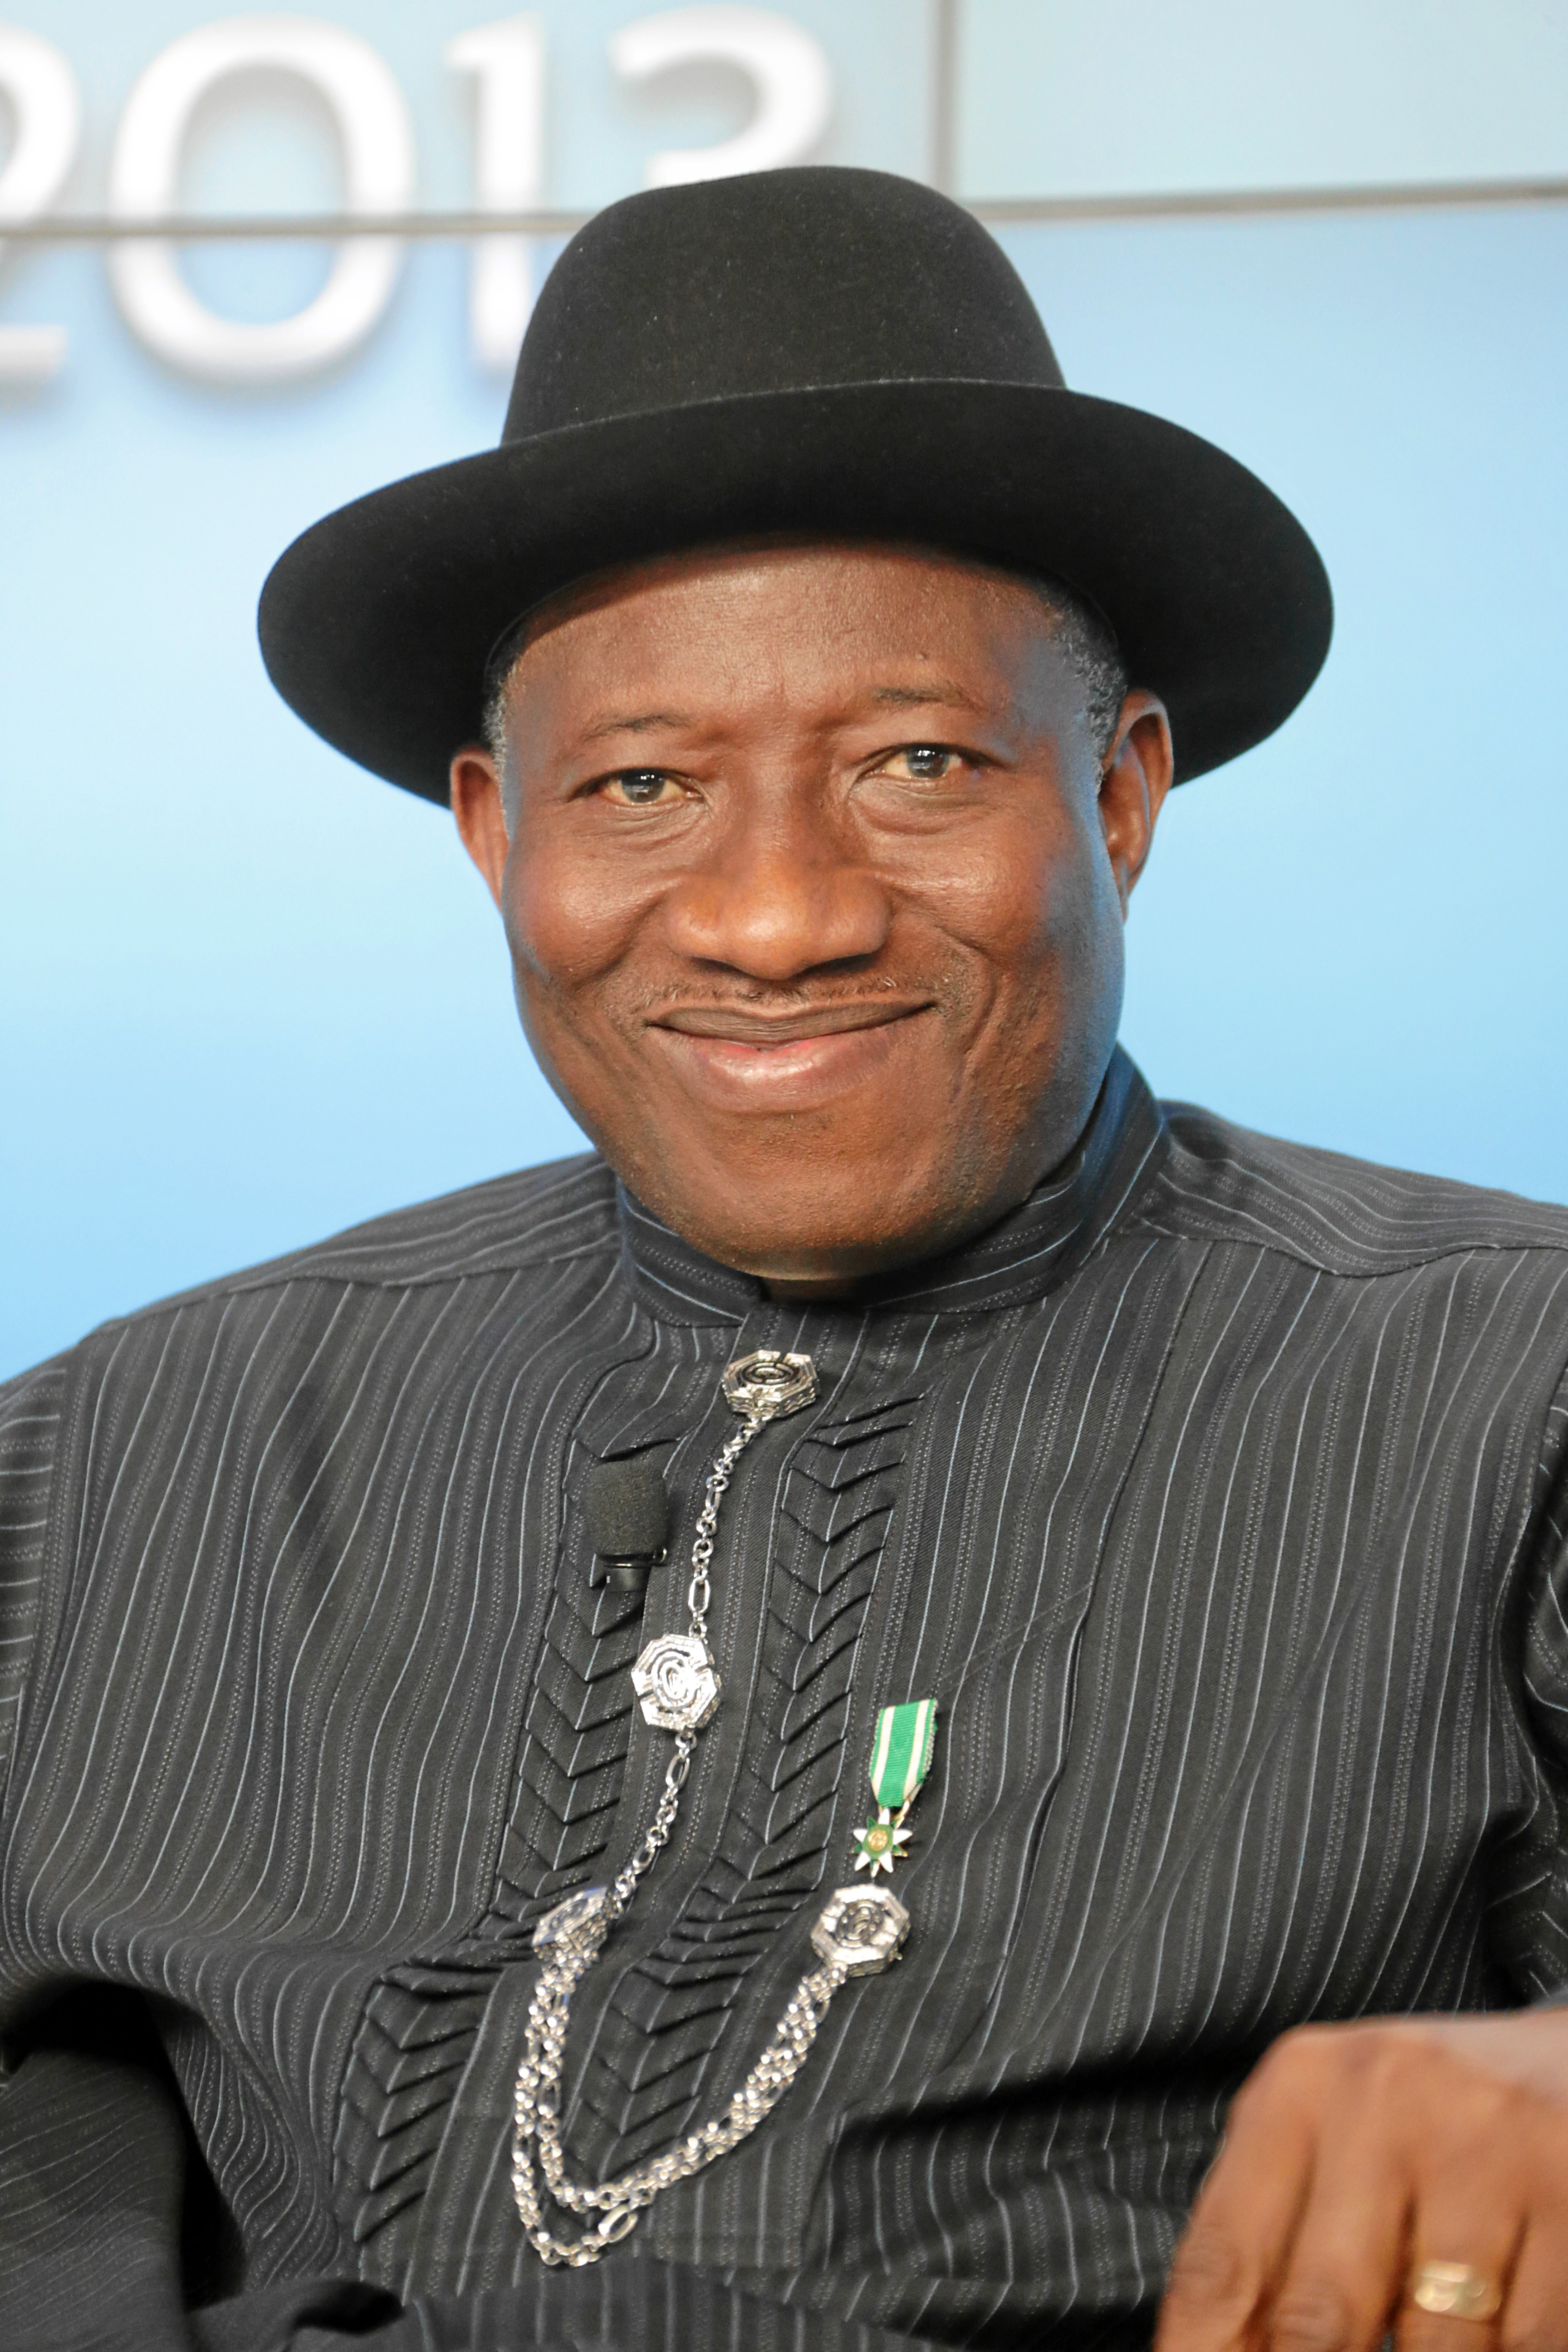 Goodluck Jonathan (2010-2015)